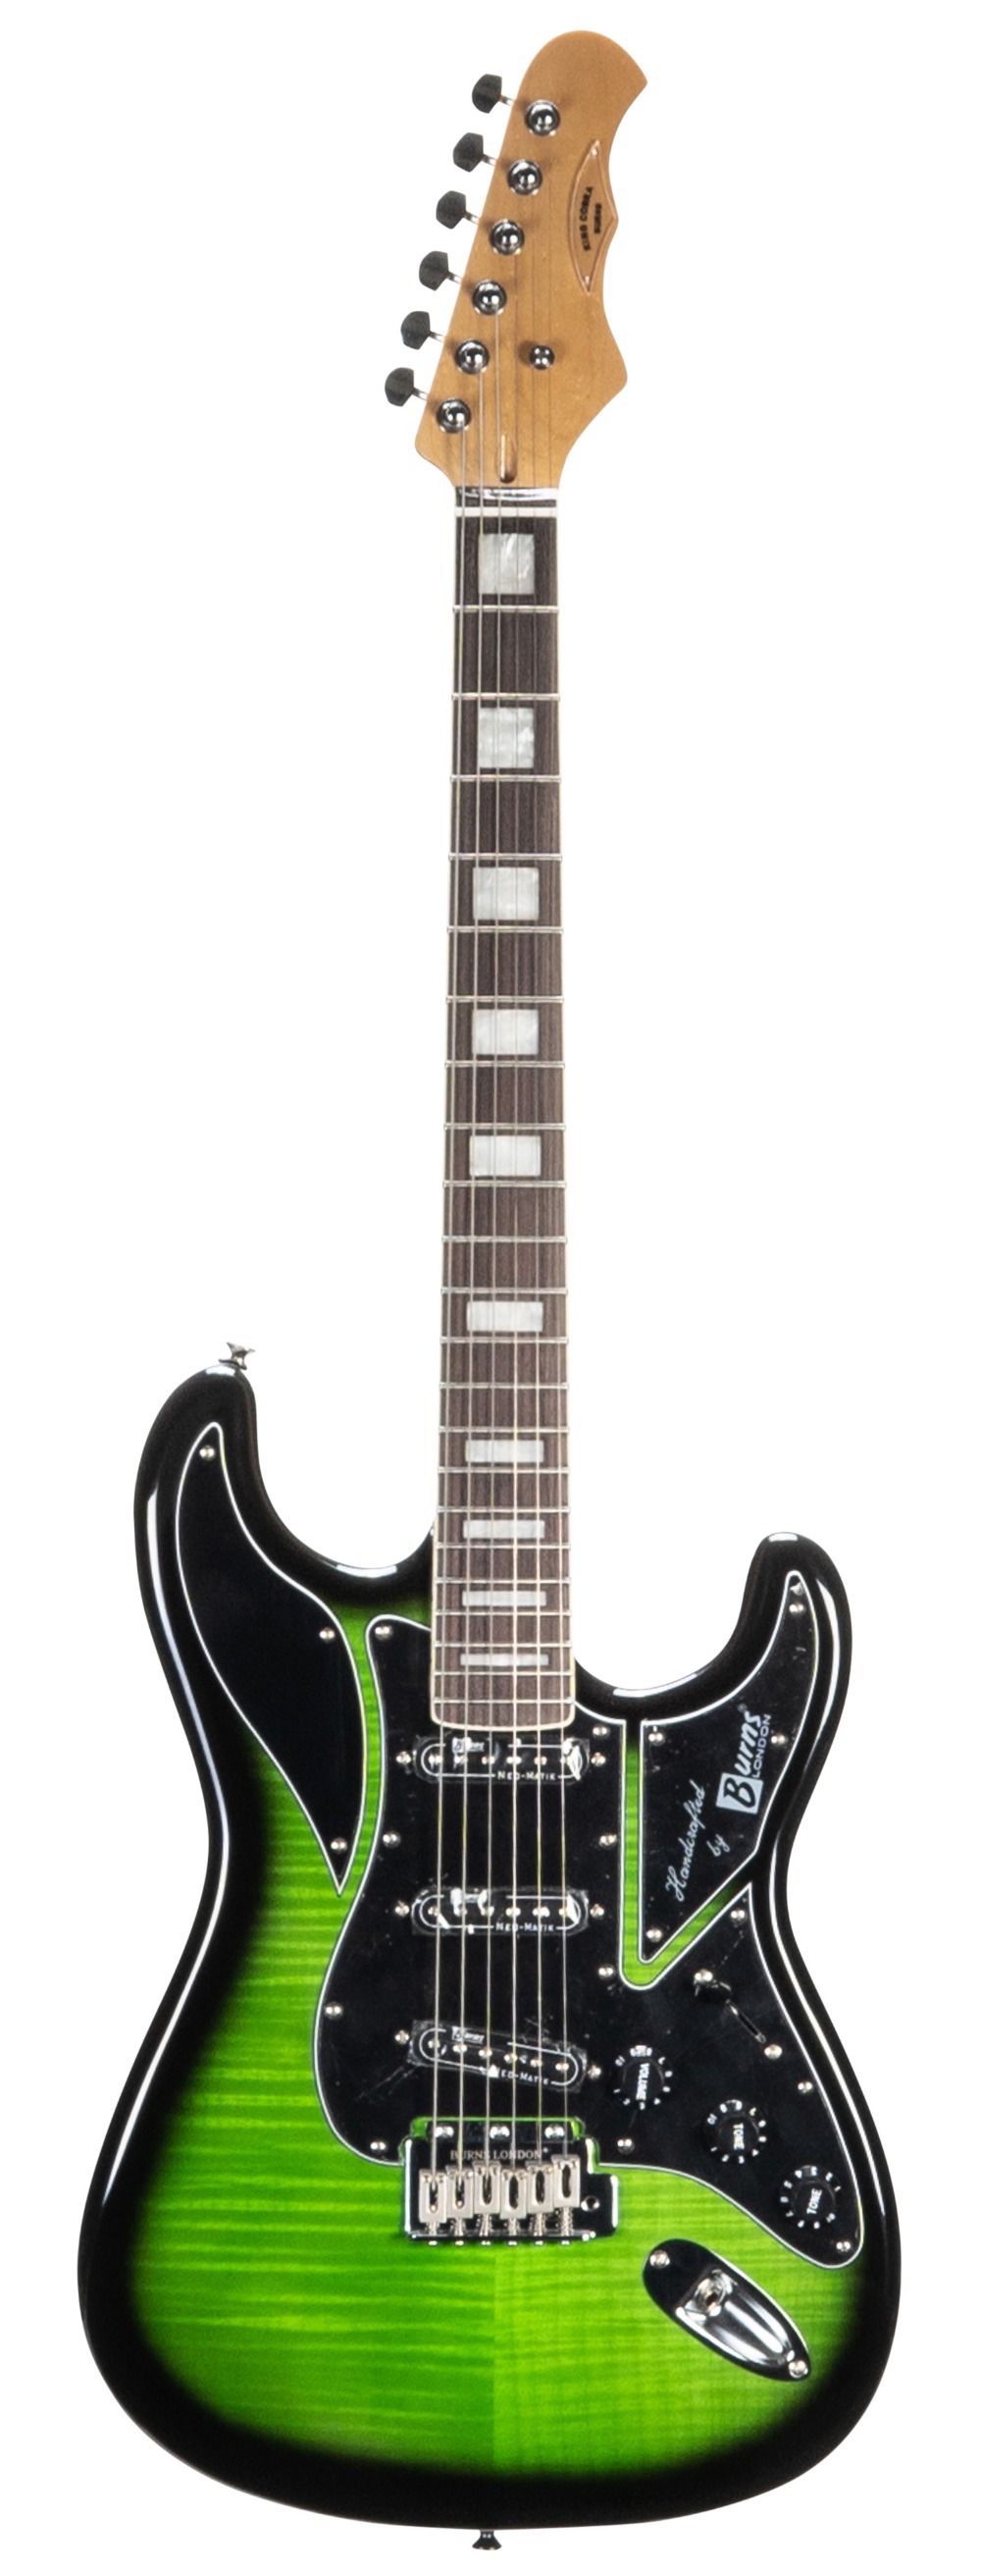 Burns Club Series King Cobra electric guitar, ser. no. 18xxxx6; Finish: green burst; Fretboard: